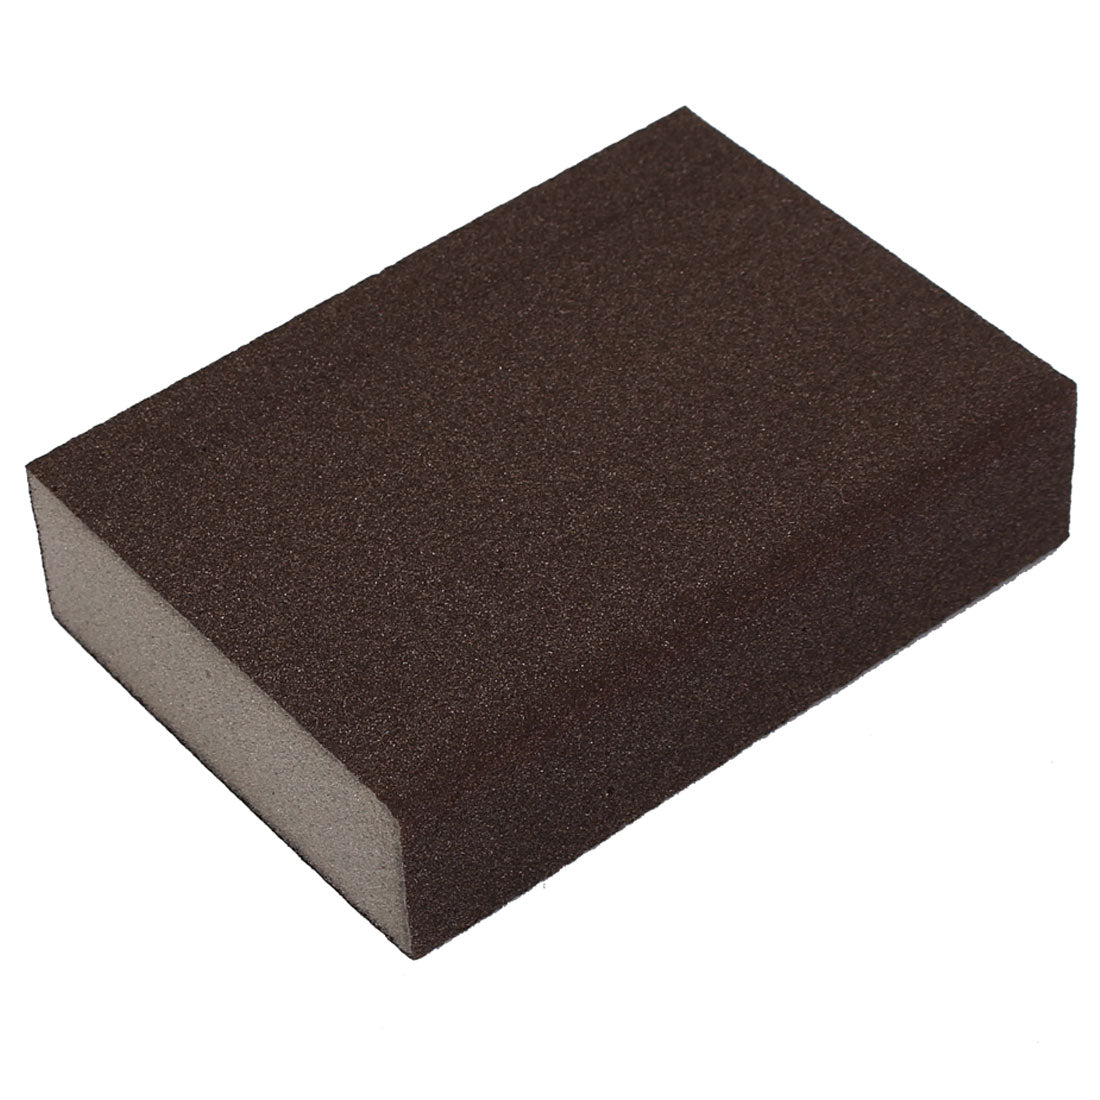 uxcell Uxcell 100mm x 70mm x 25mm 400 Grit Sponges Polishing Pad Sanding Block